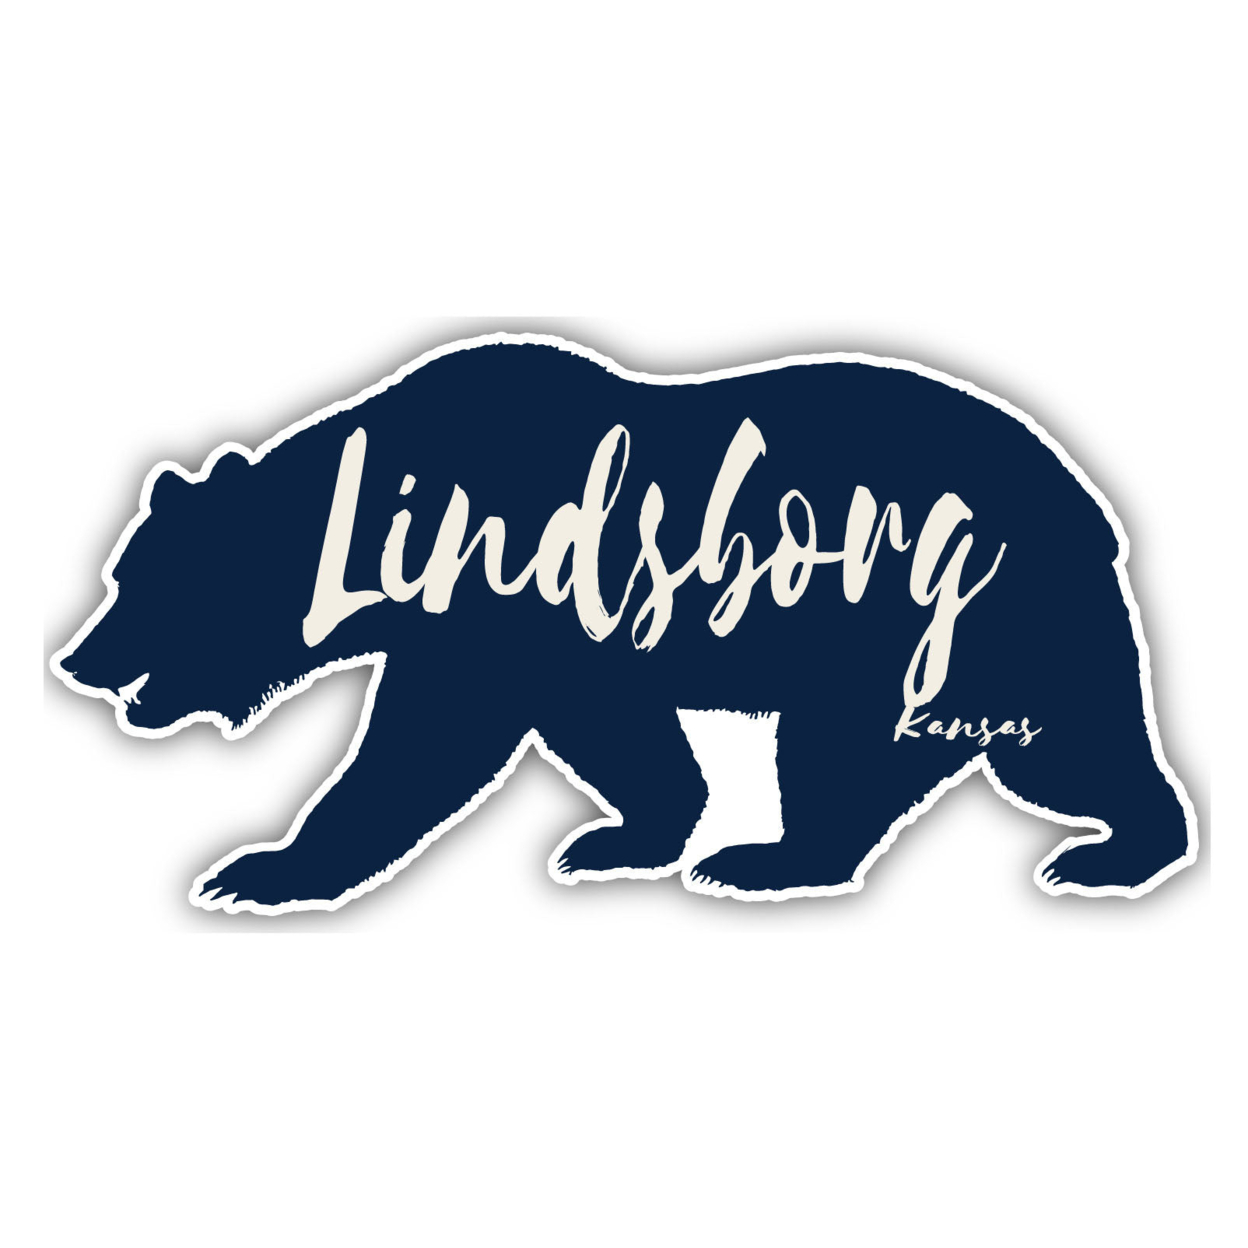 Lindsborg Kansas Souvenir Decorative Stickers (Choose Theme And Size) - 2-Inch, Tent